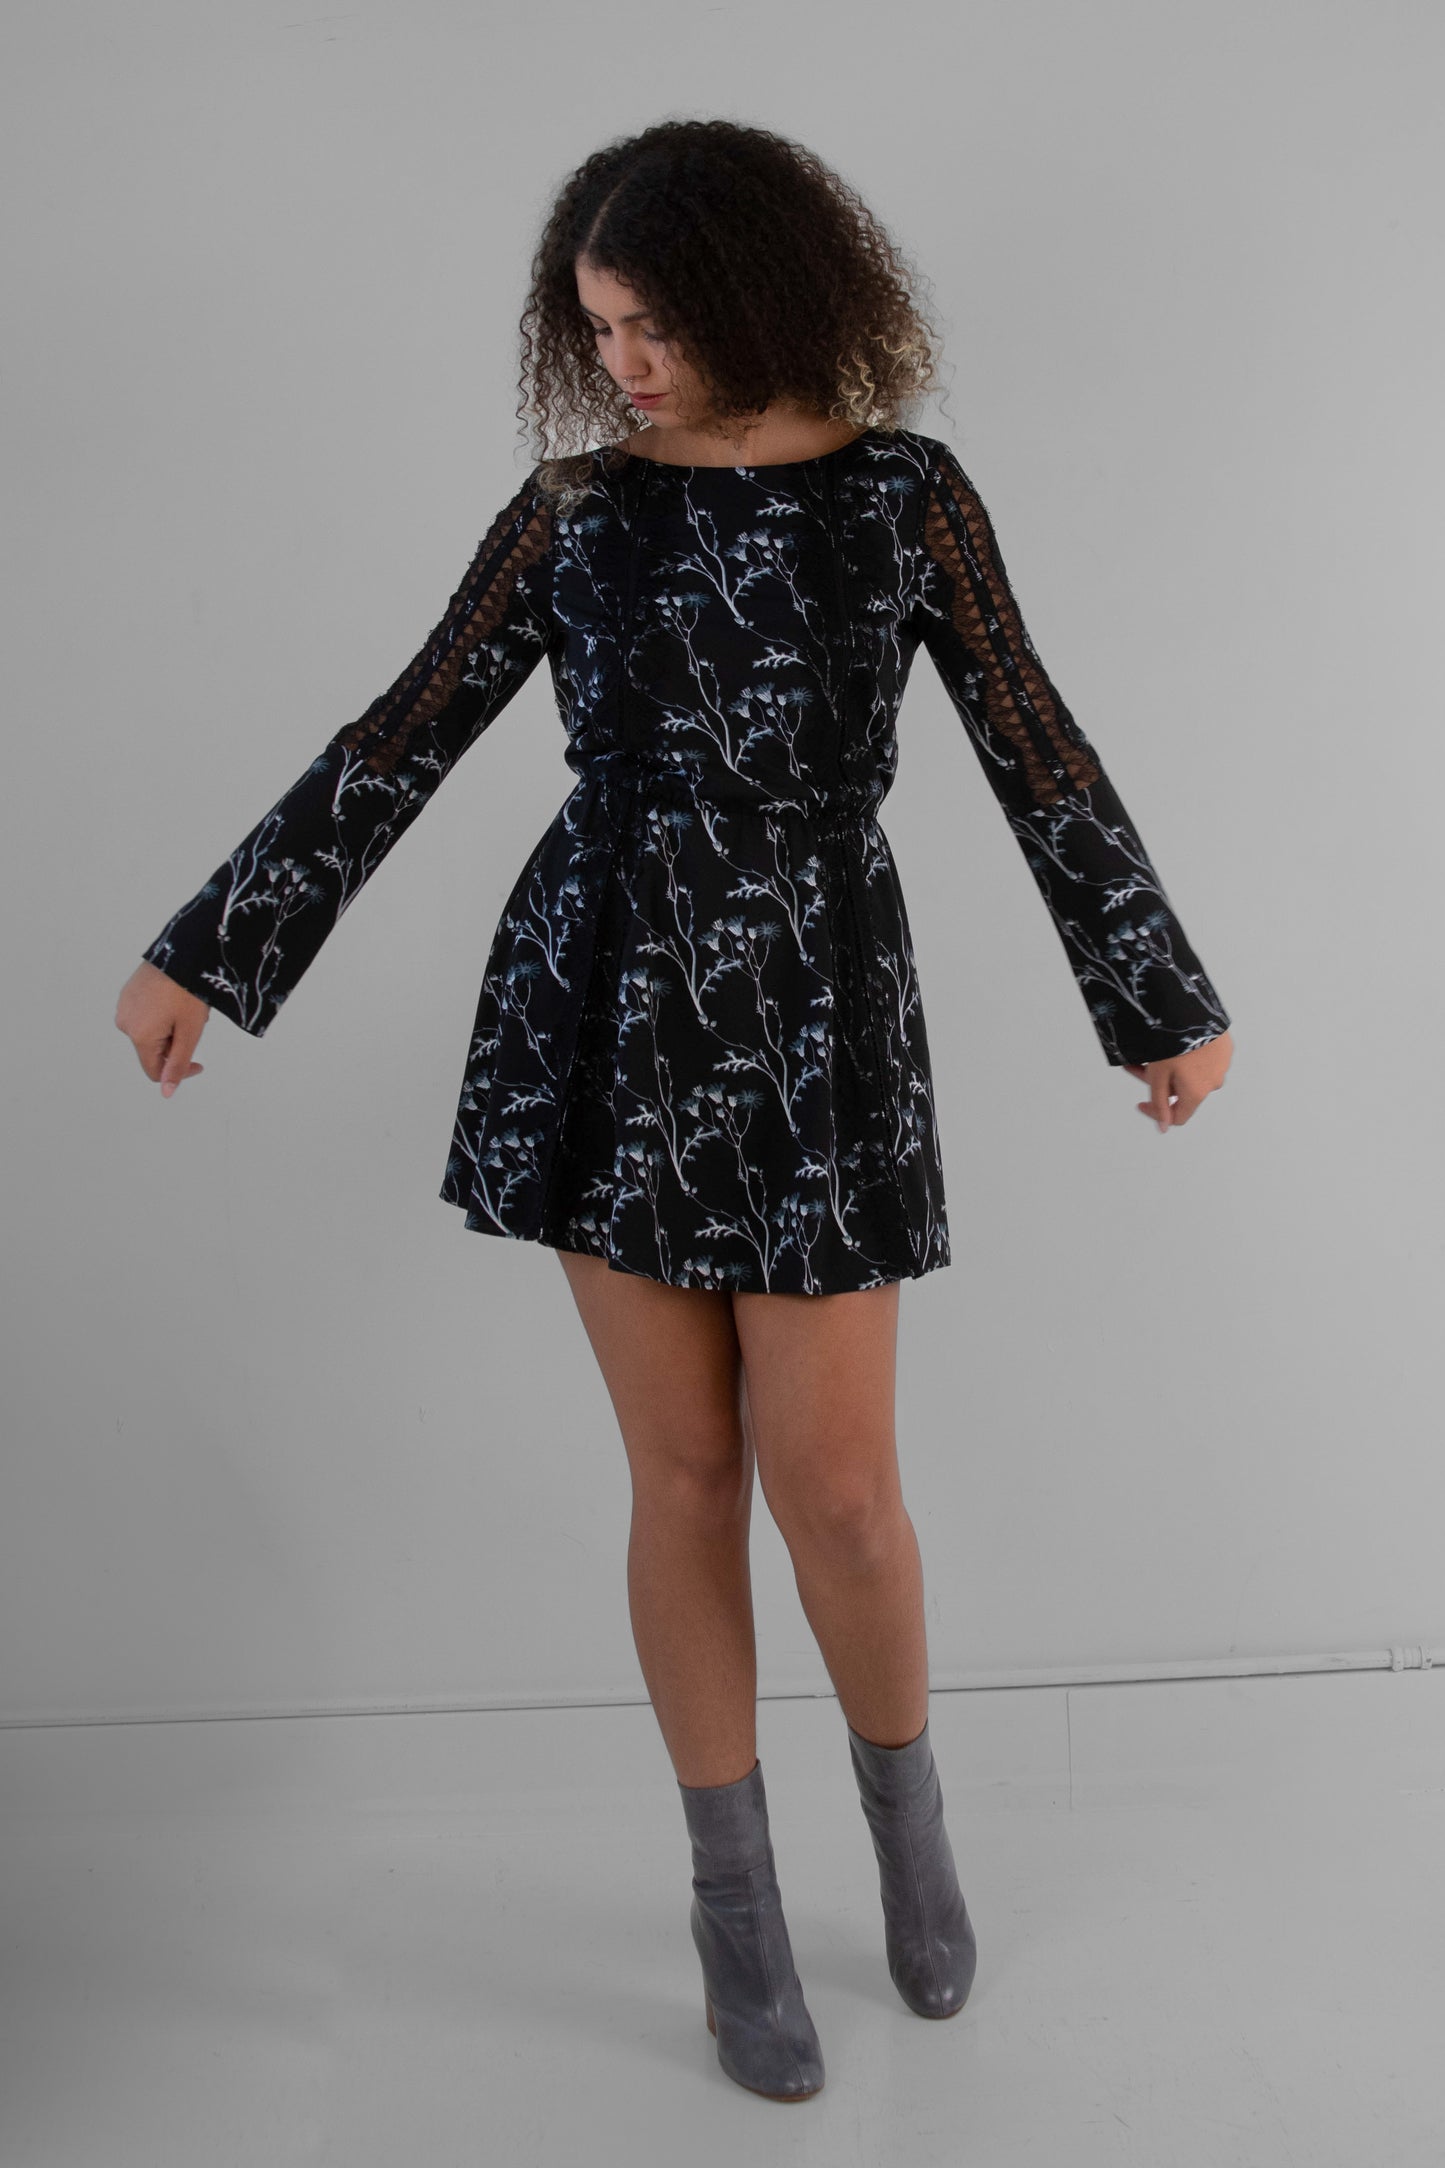 Thakoon Addition "Fall RTW" Mini Dress in Dark Floral (Black, Blue, White) - XS